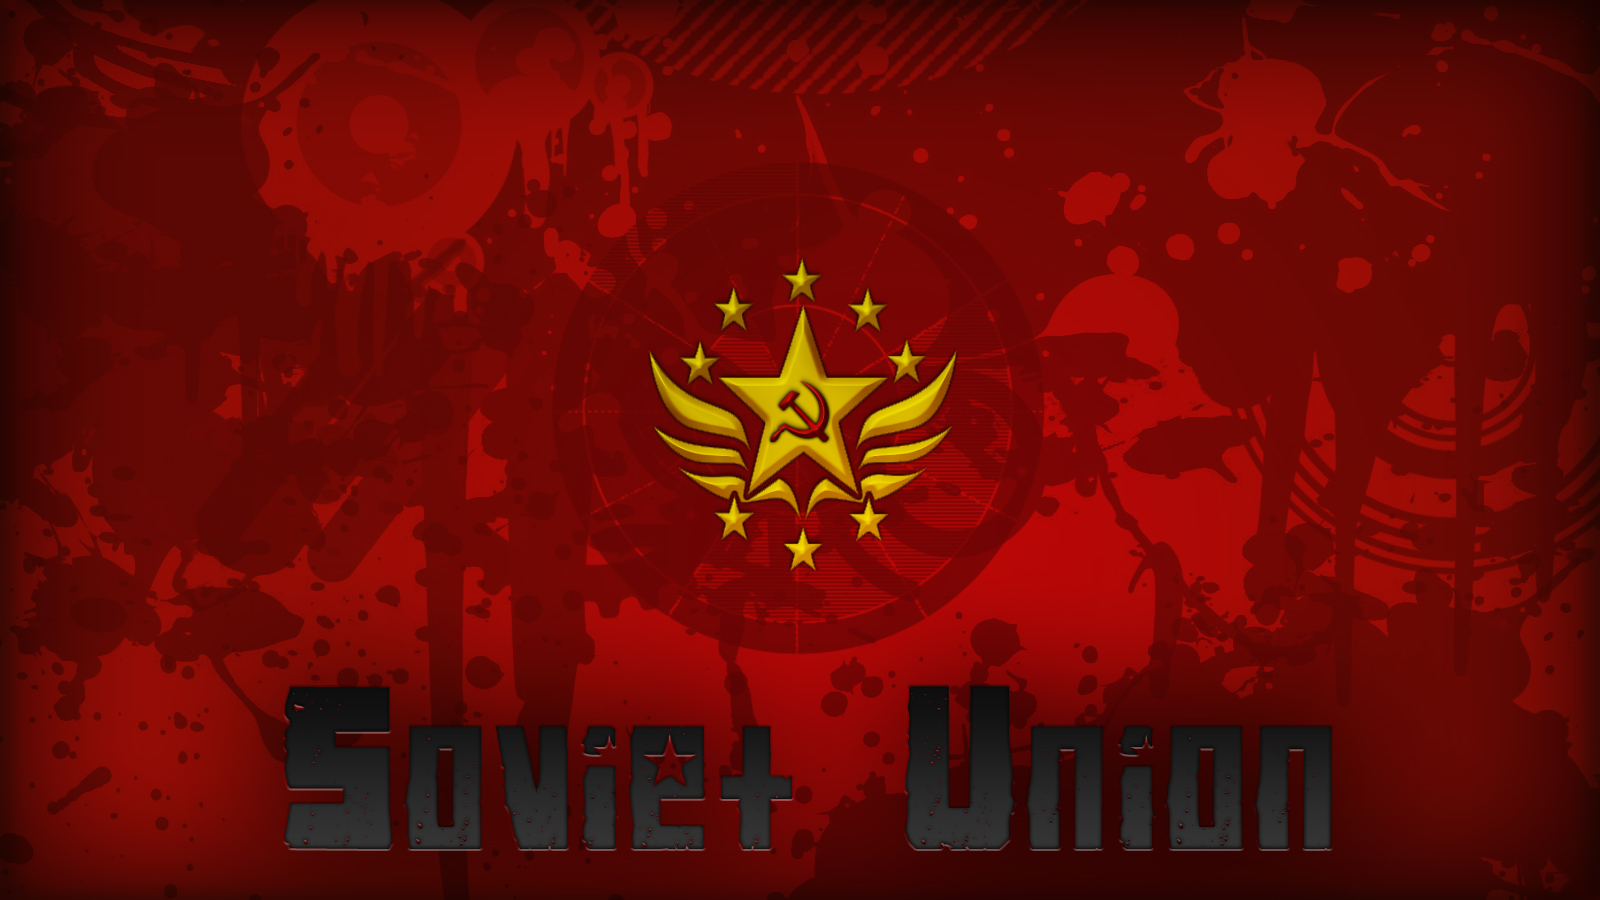 Soviet Union By Psdesignes